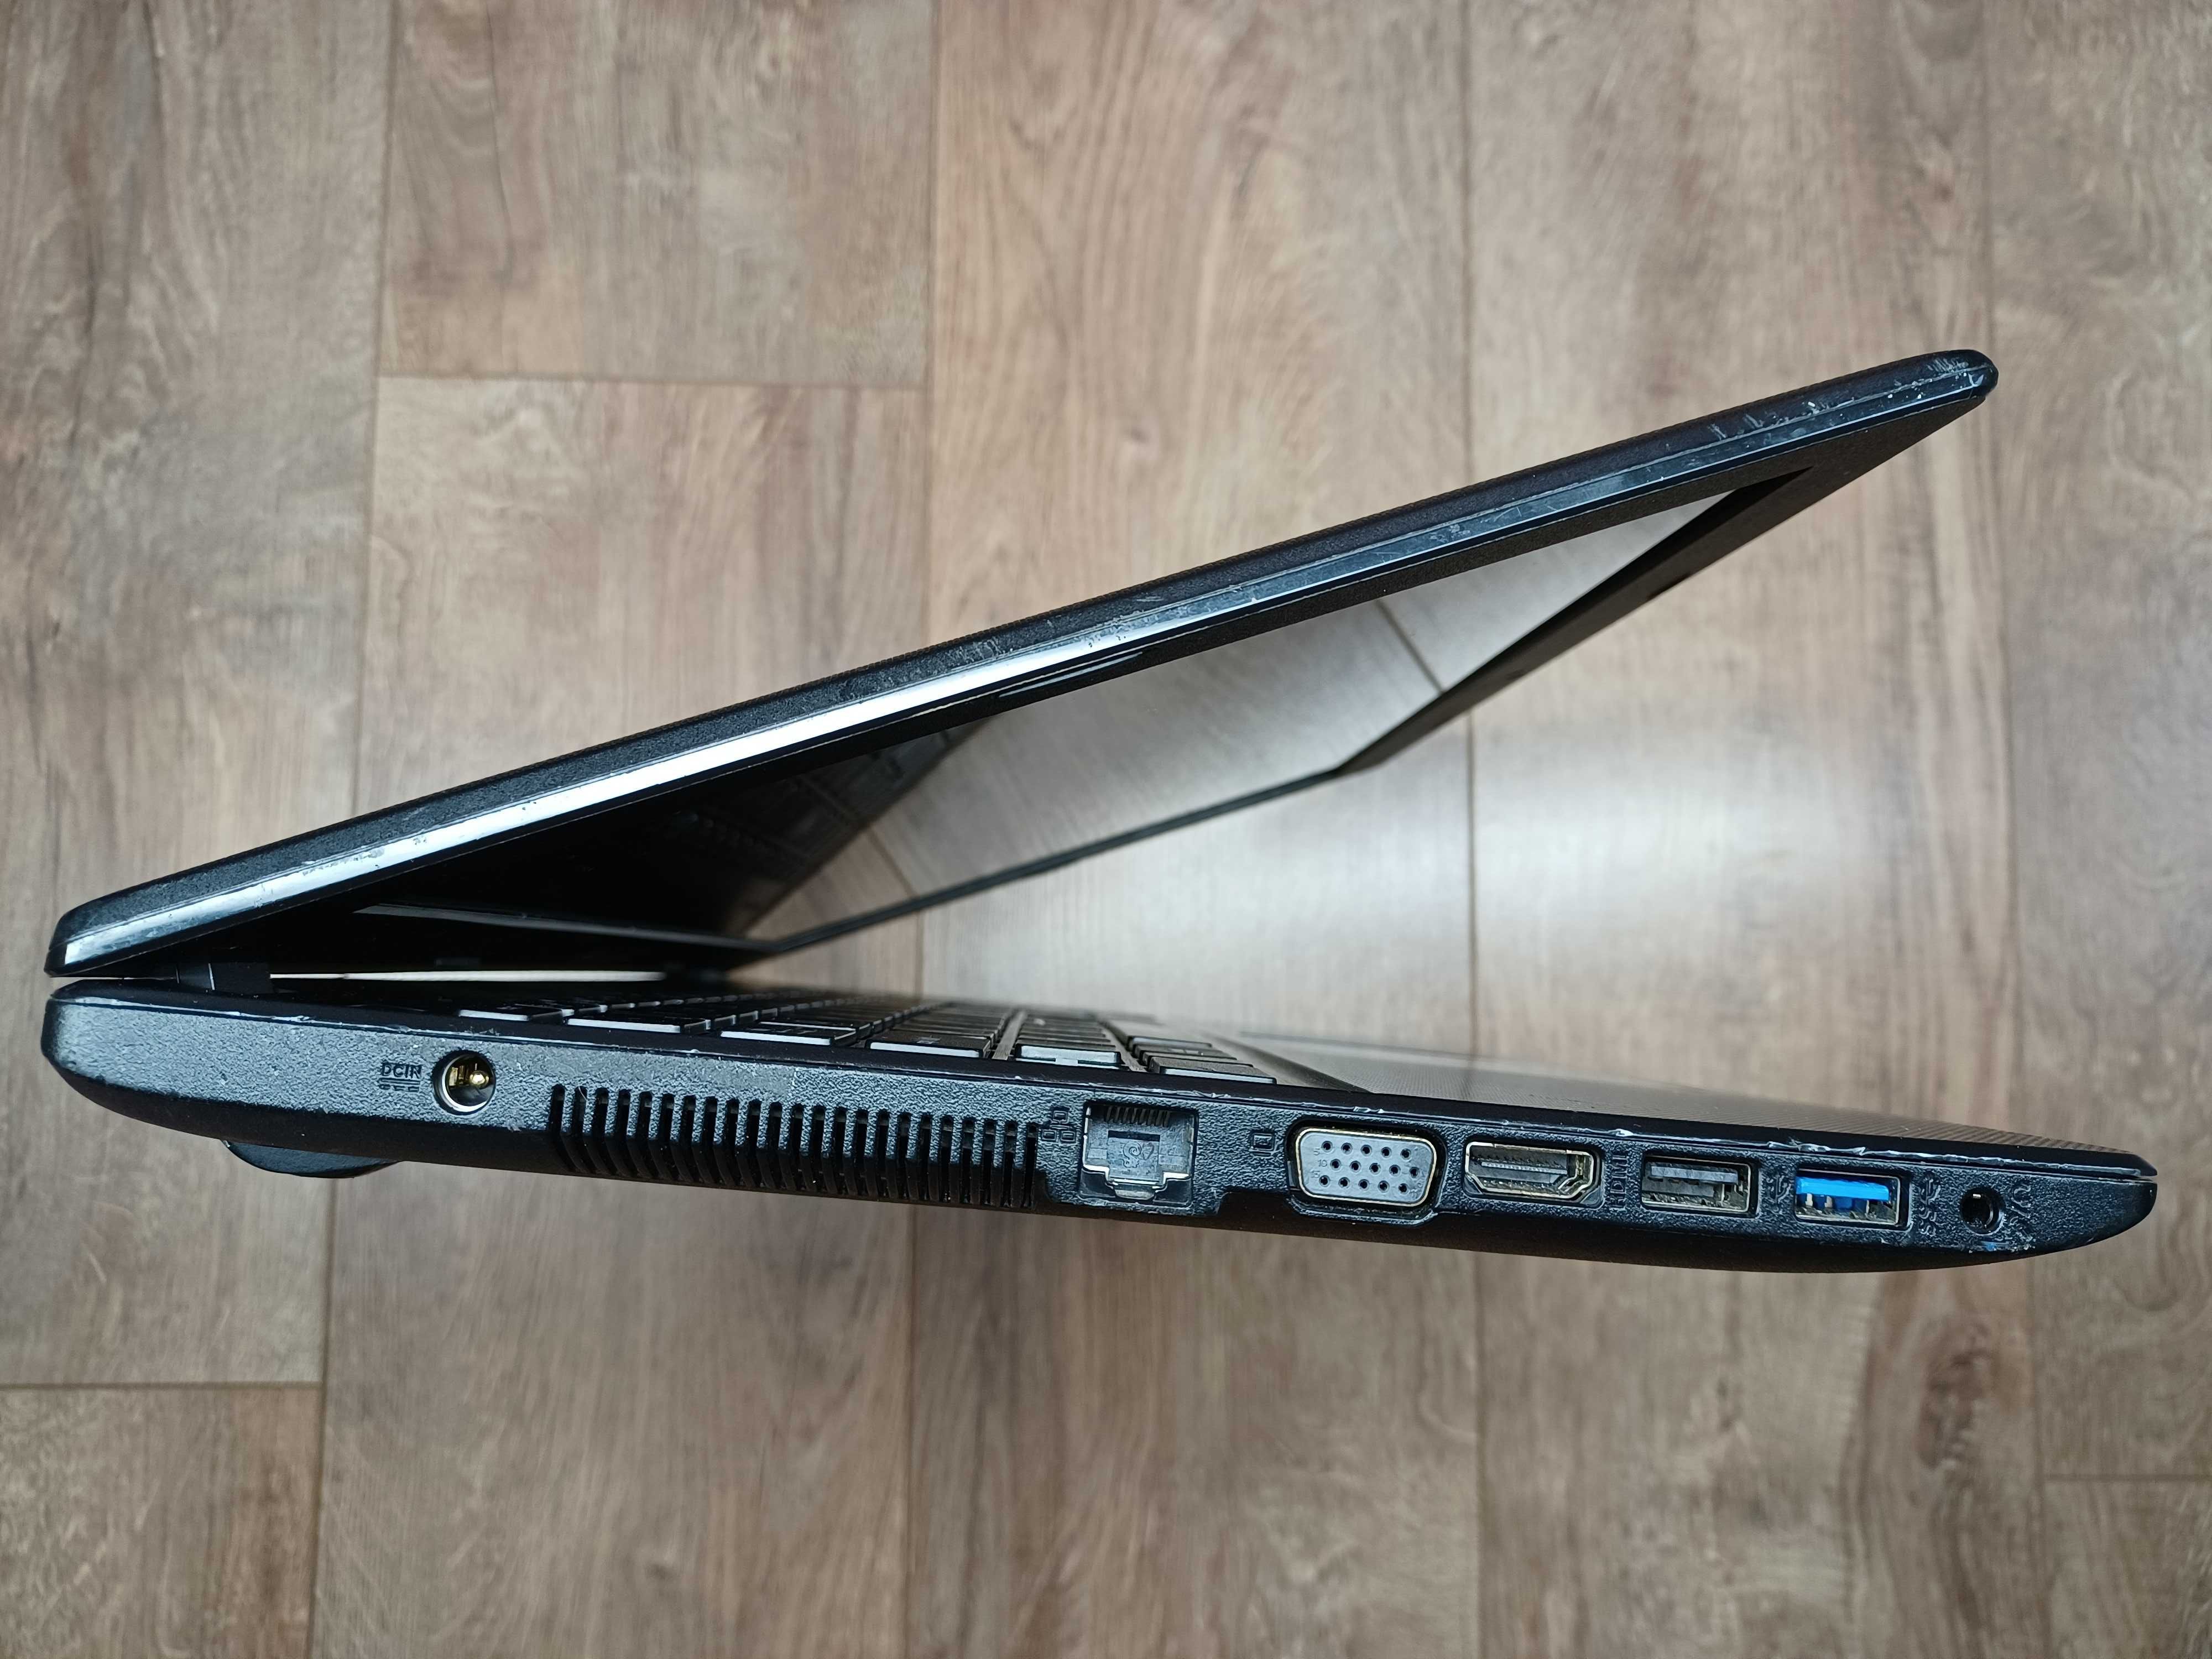 Ноутбук Asus X551m